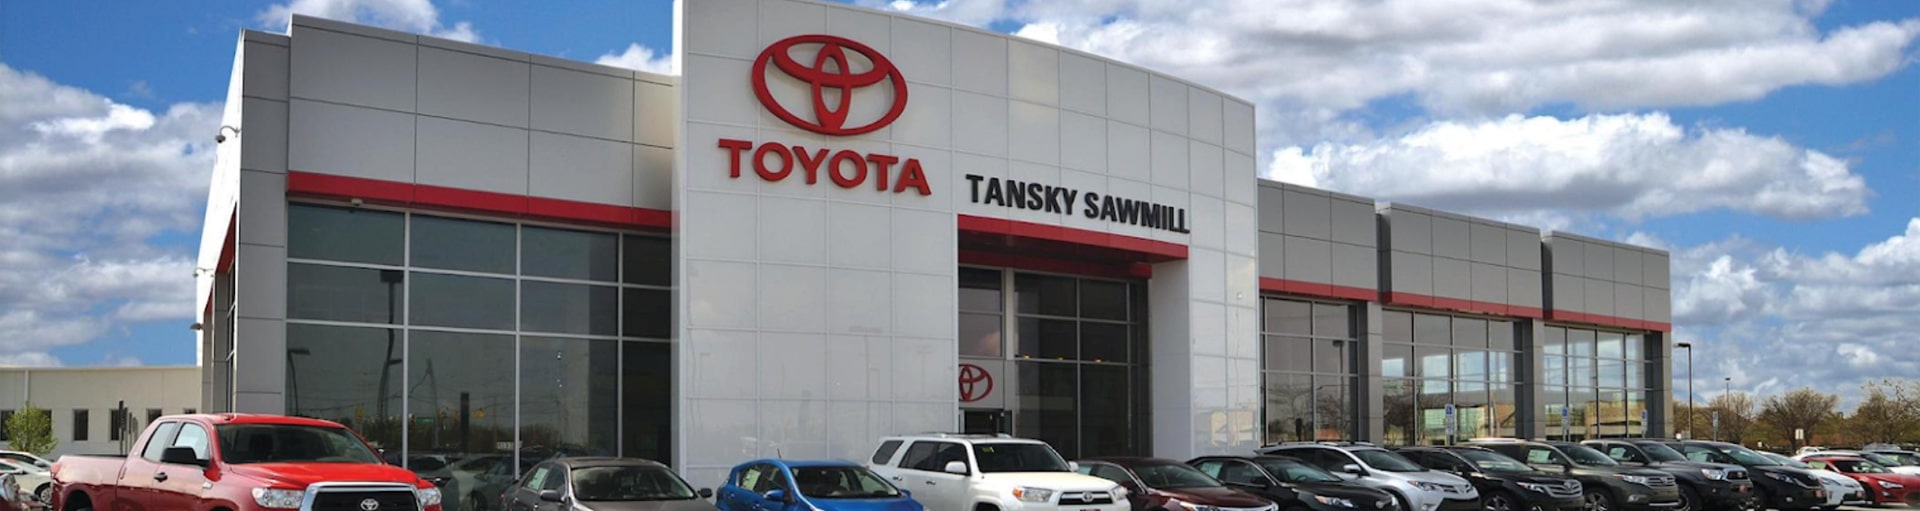 Tansky Sawmill Toyota Yakima Cargo Accessories